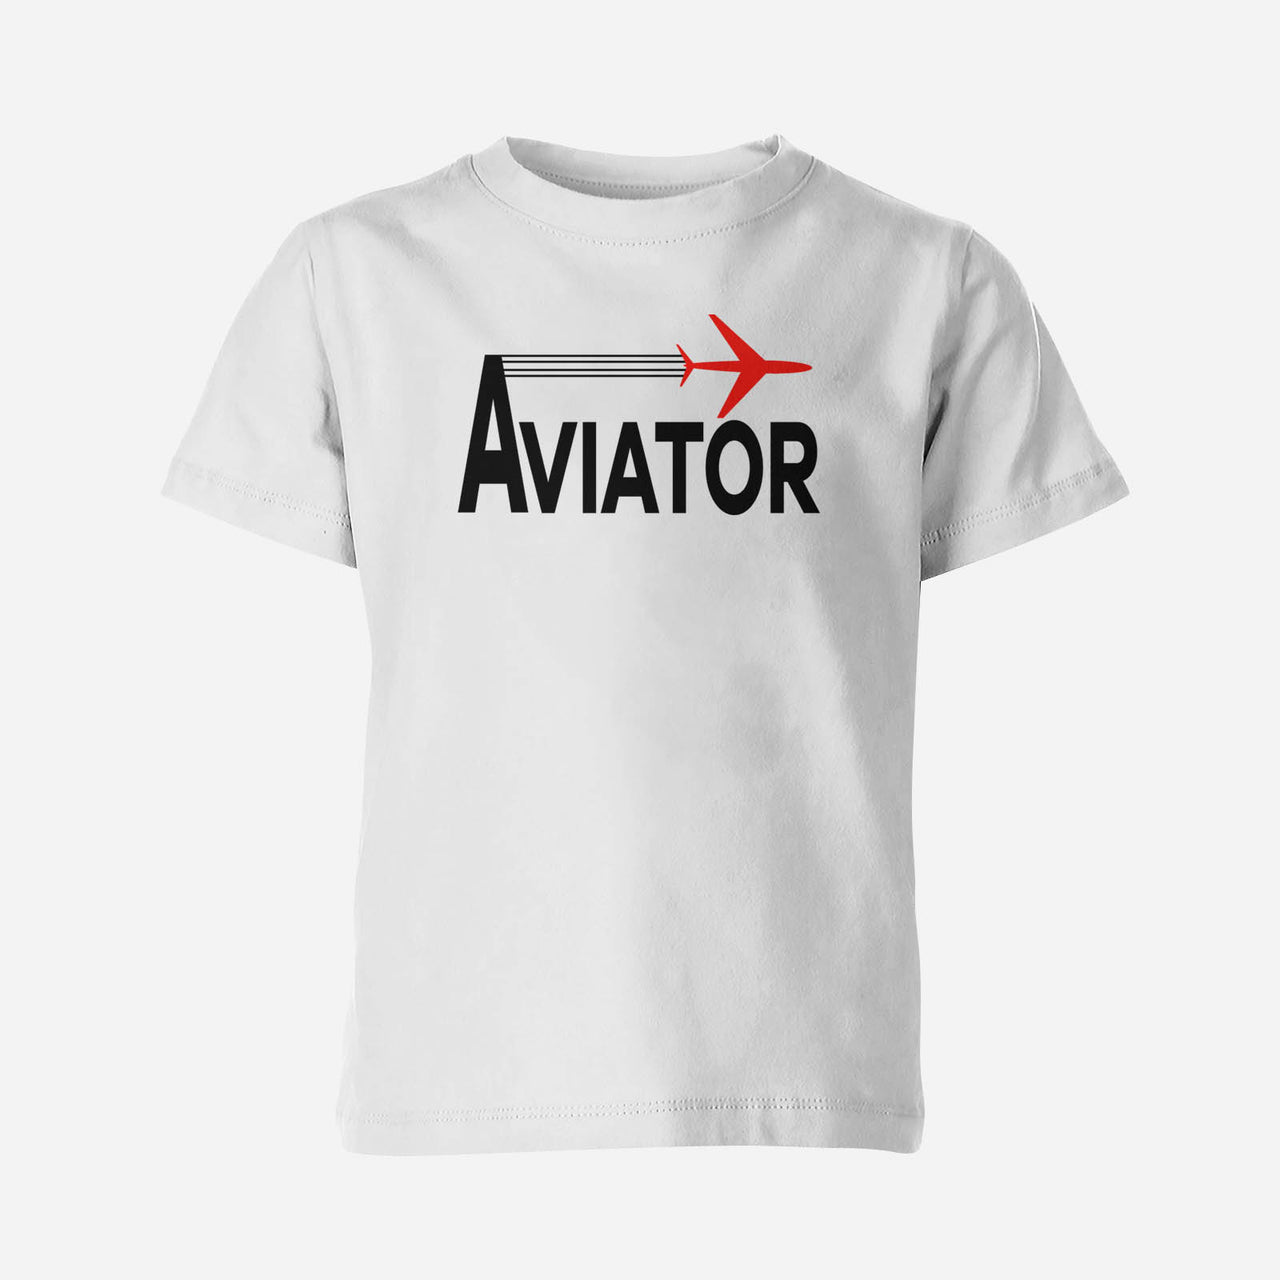 Aviator Designed Children T-Shirts